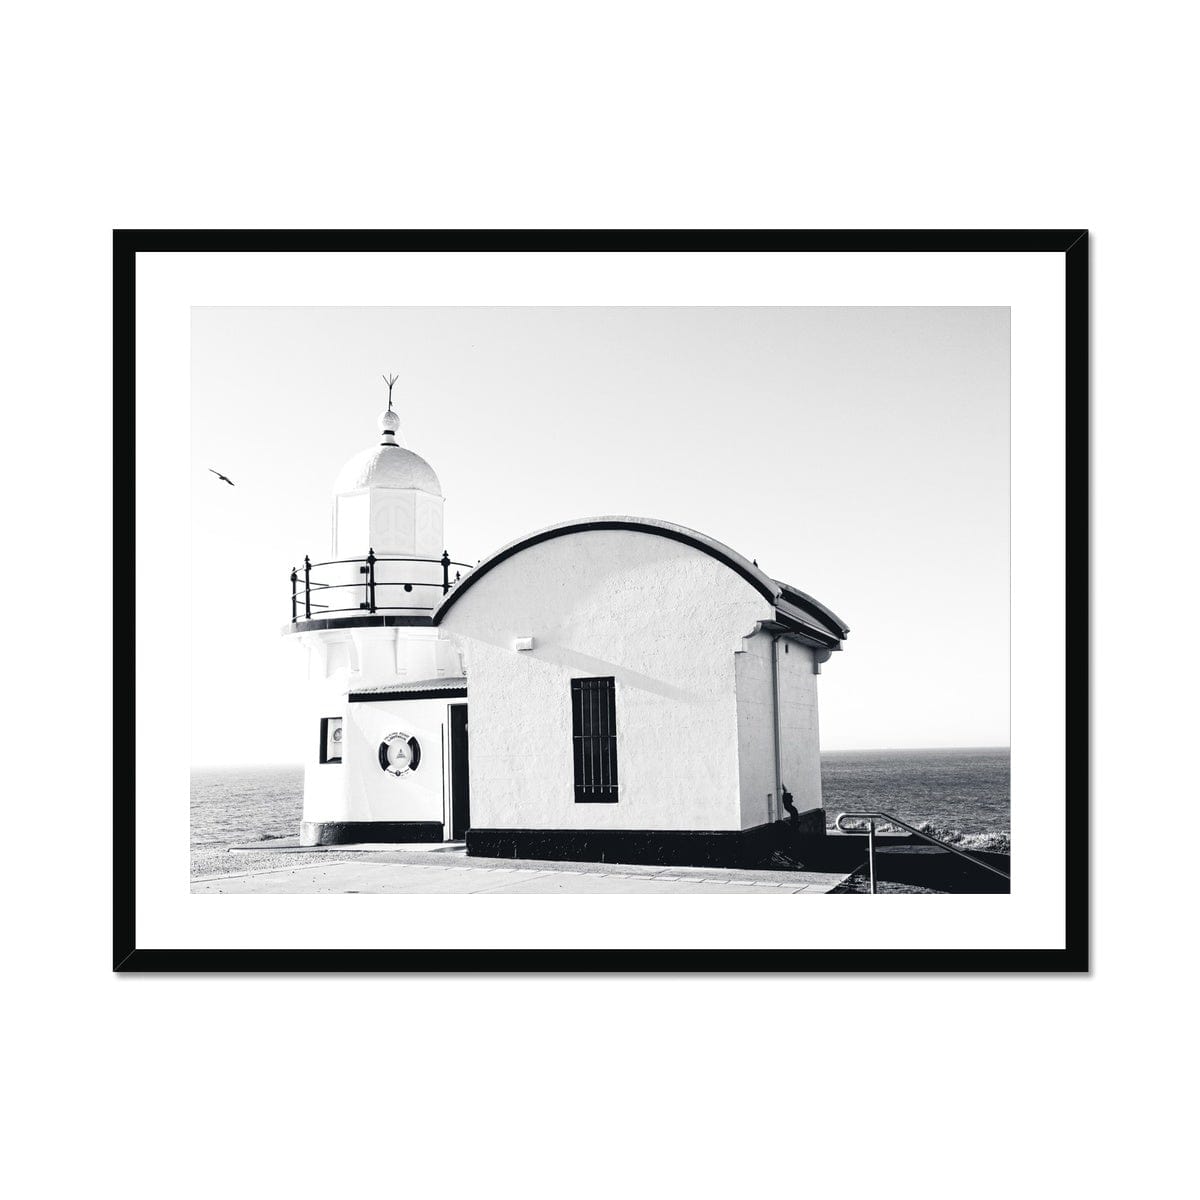 Adam Davies Framed 24"x18" (60.96x45.72cm) / Black Frame Tacking Point Lighthouse V3 Framed & Mounted Print